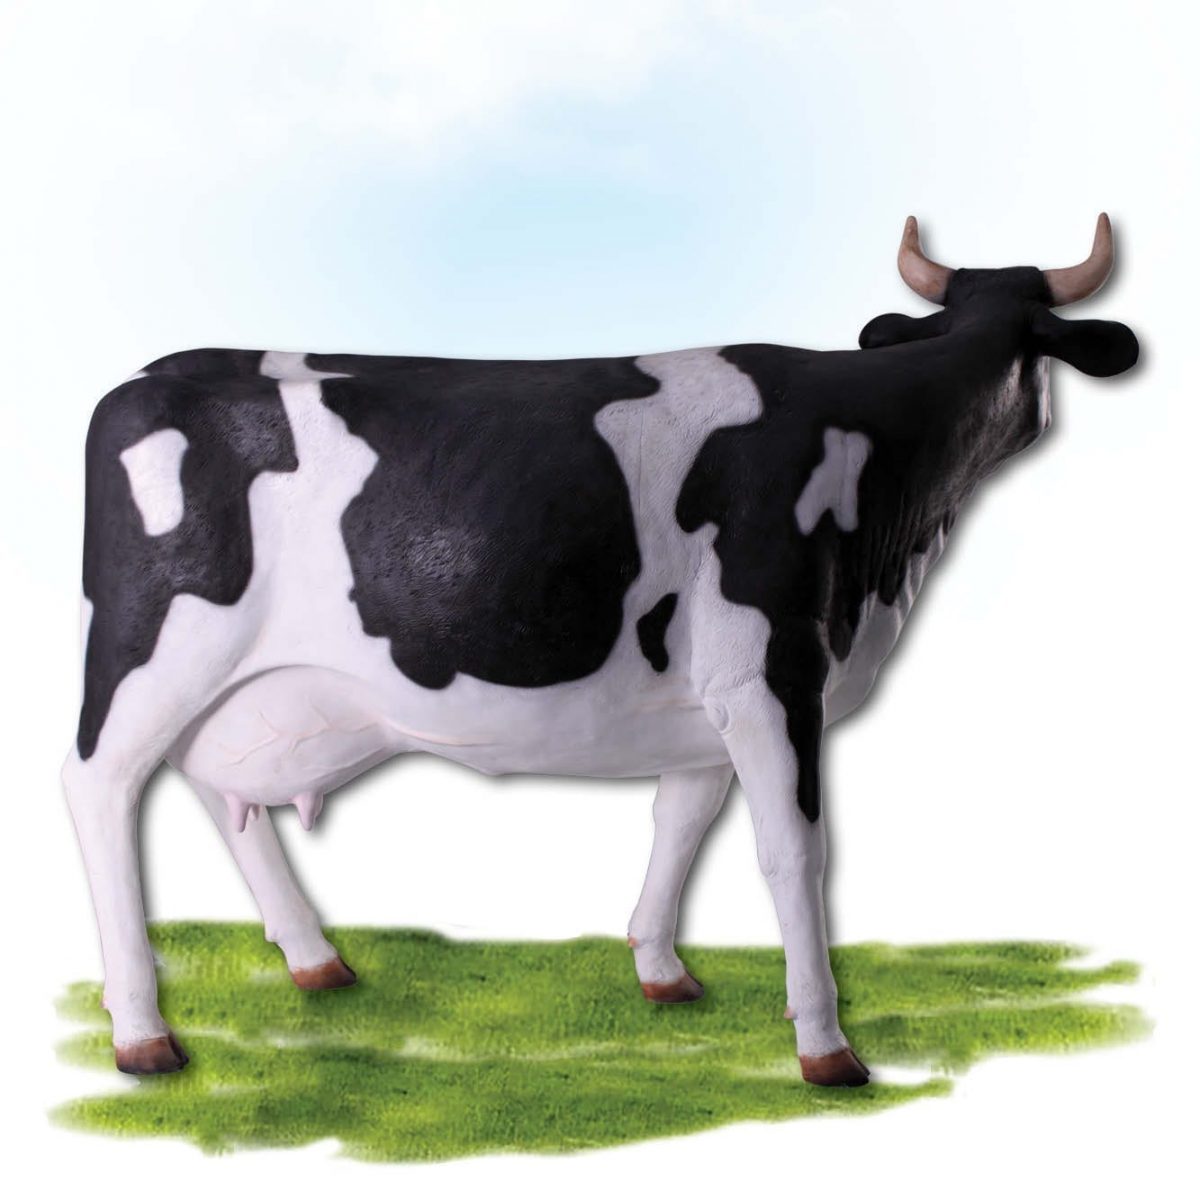 Friesian Cow - Head Up With Horns Sculpture - Australia